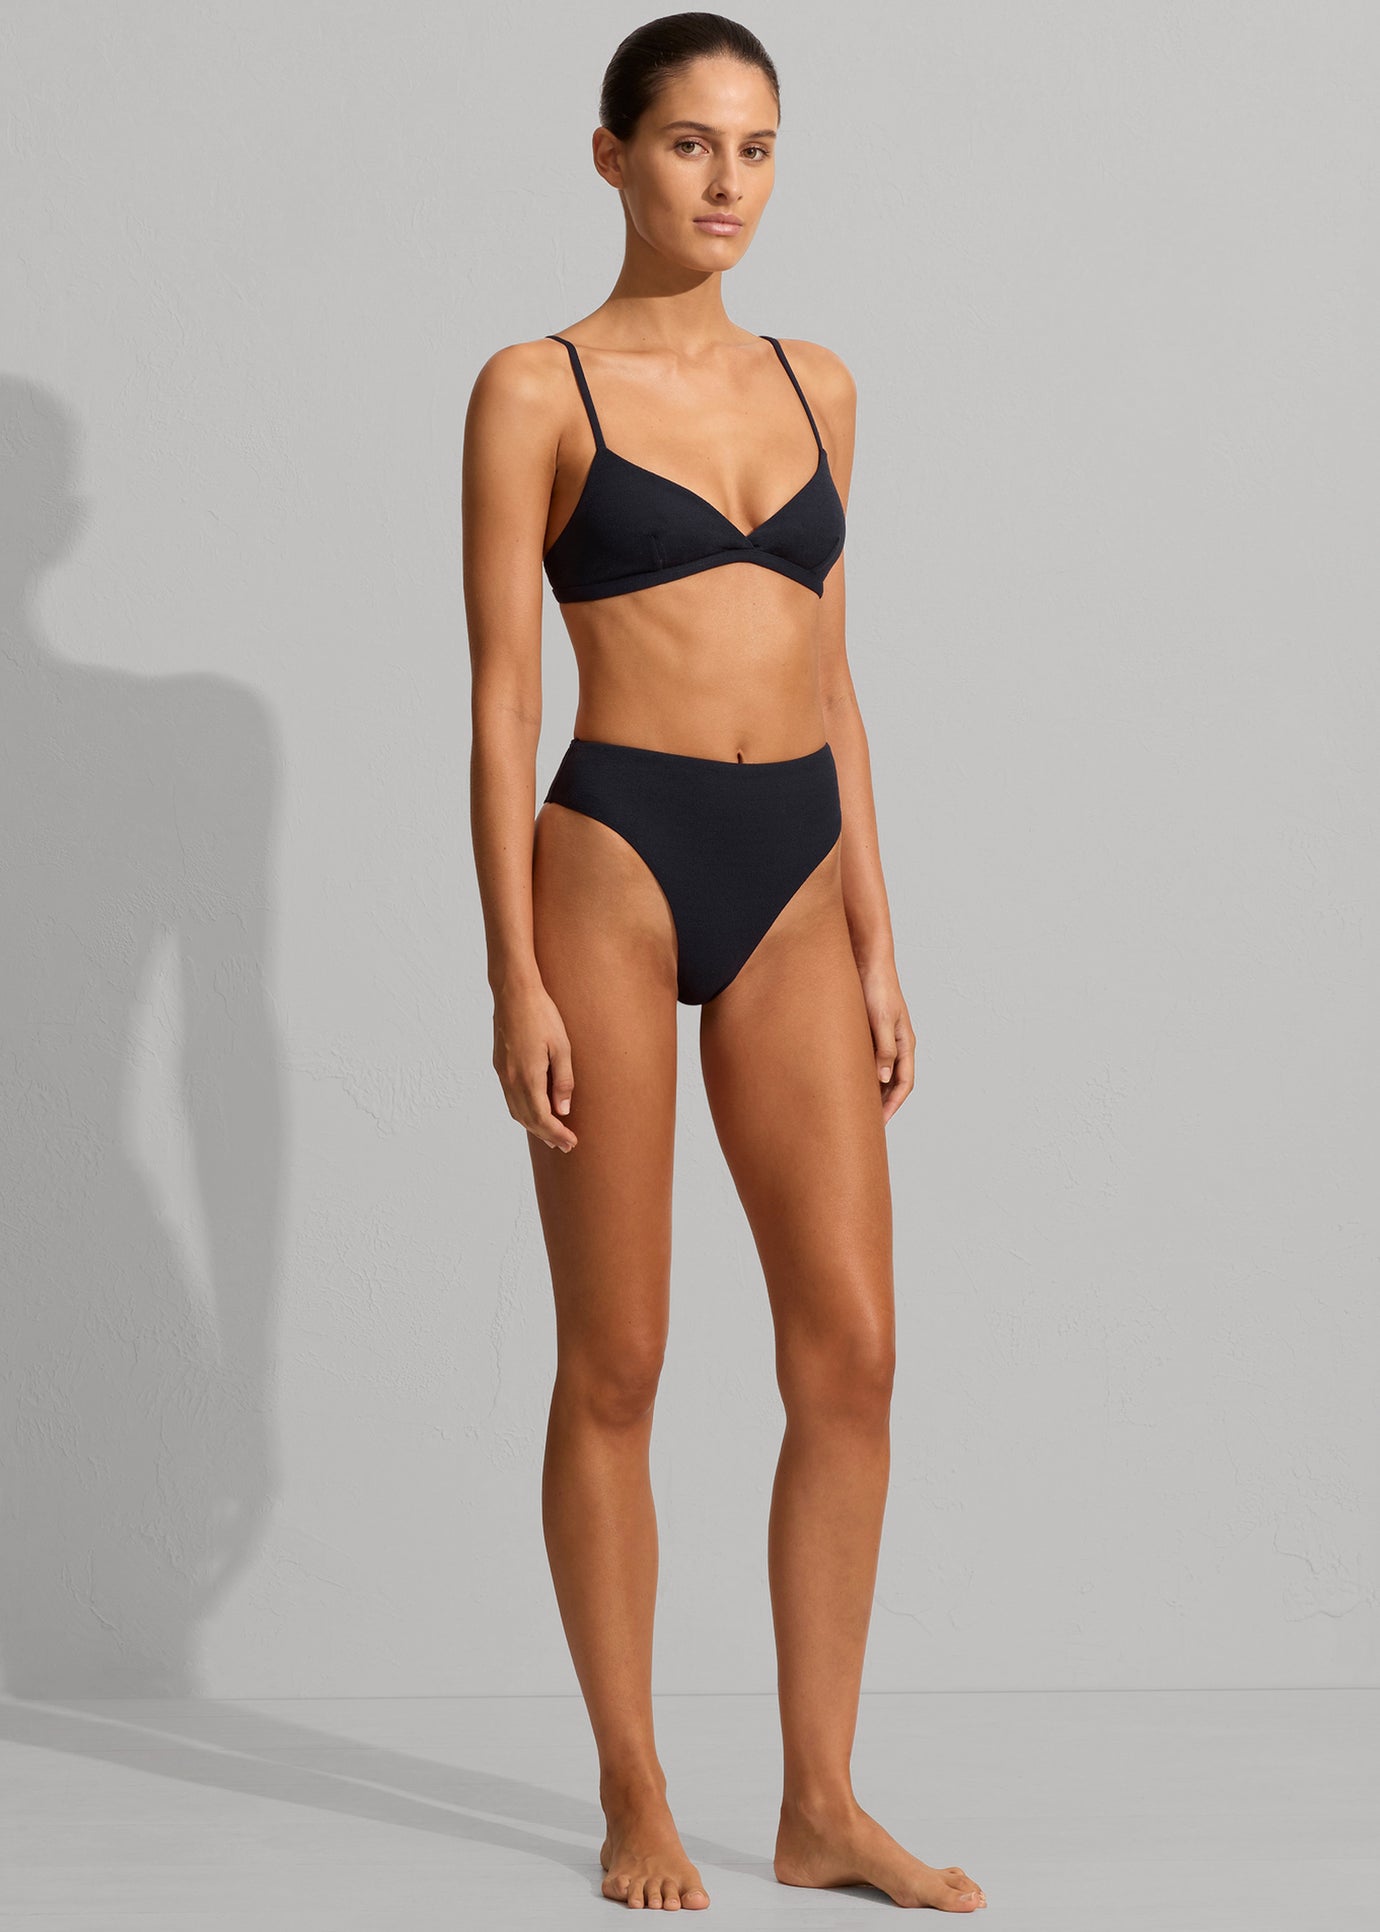 Matteau Tri Bikini Top - Navy Crinkle - 1